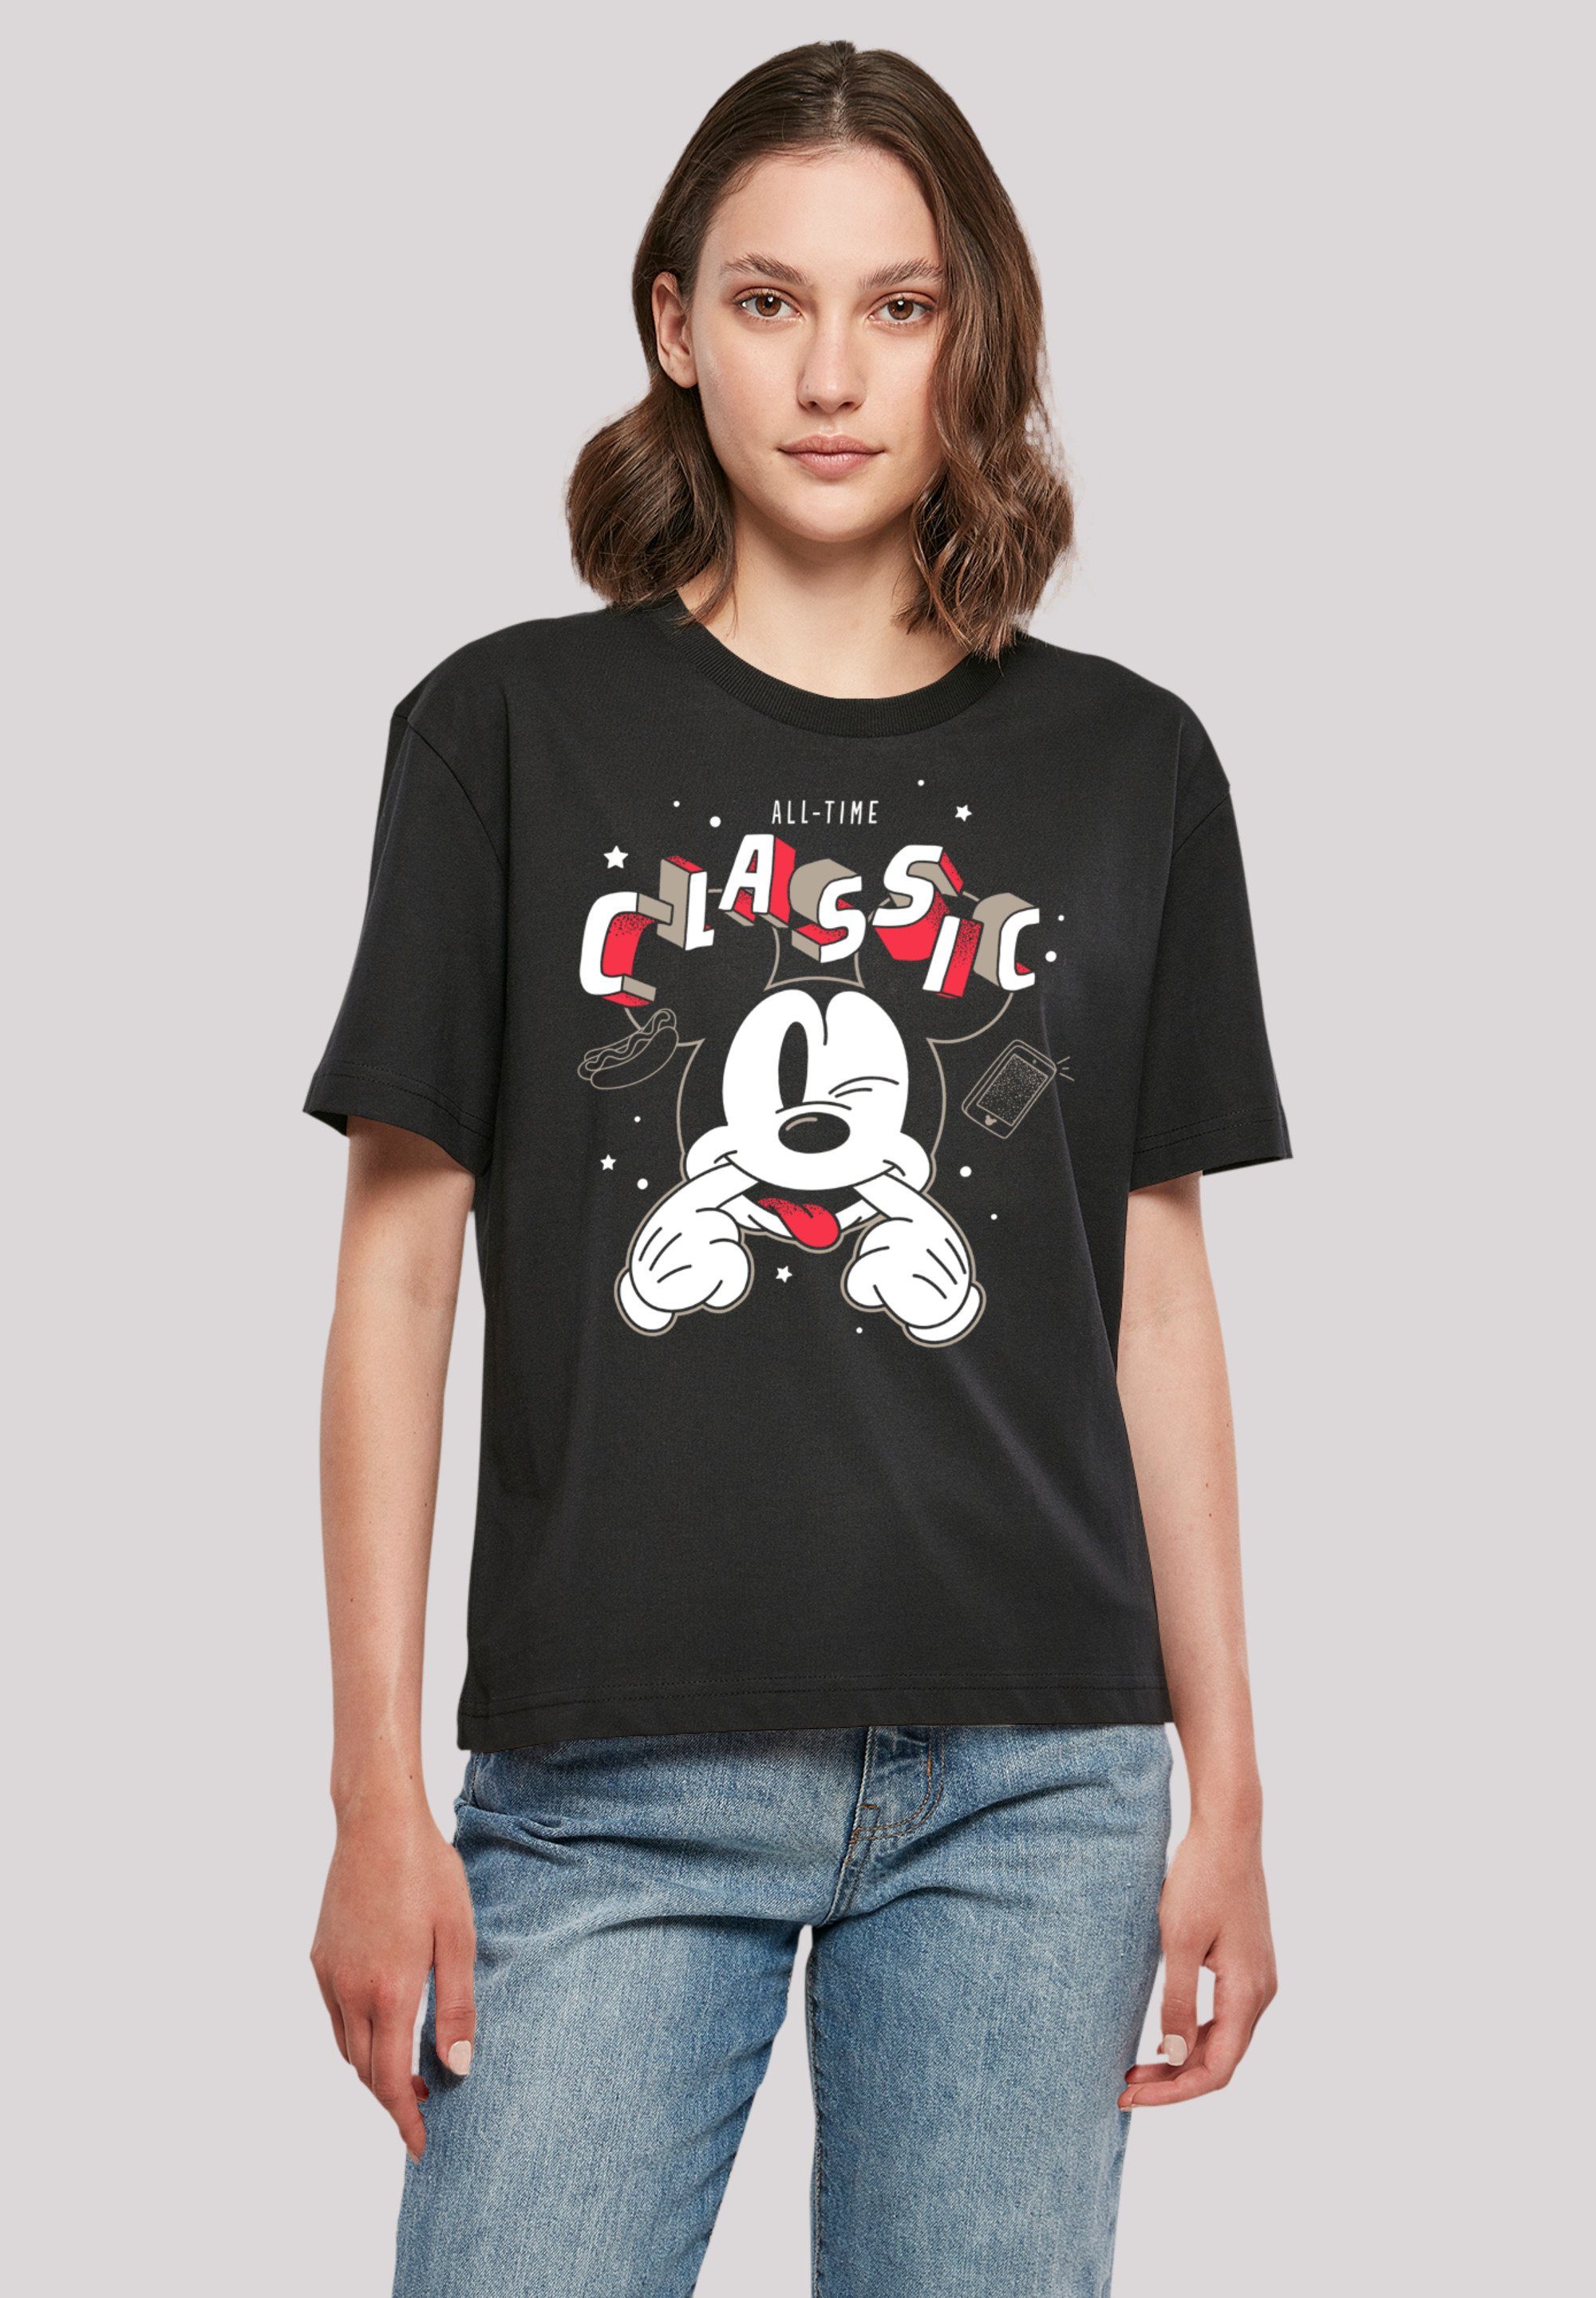 F4NT4STIC T-Shirt Disney Micky Maus All Time Classic Premium Qualität,  Komfortabel und vielseitig kombinierbar